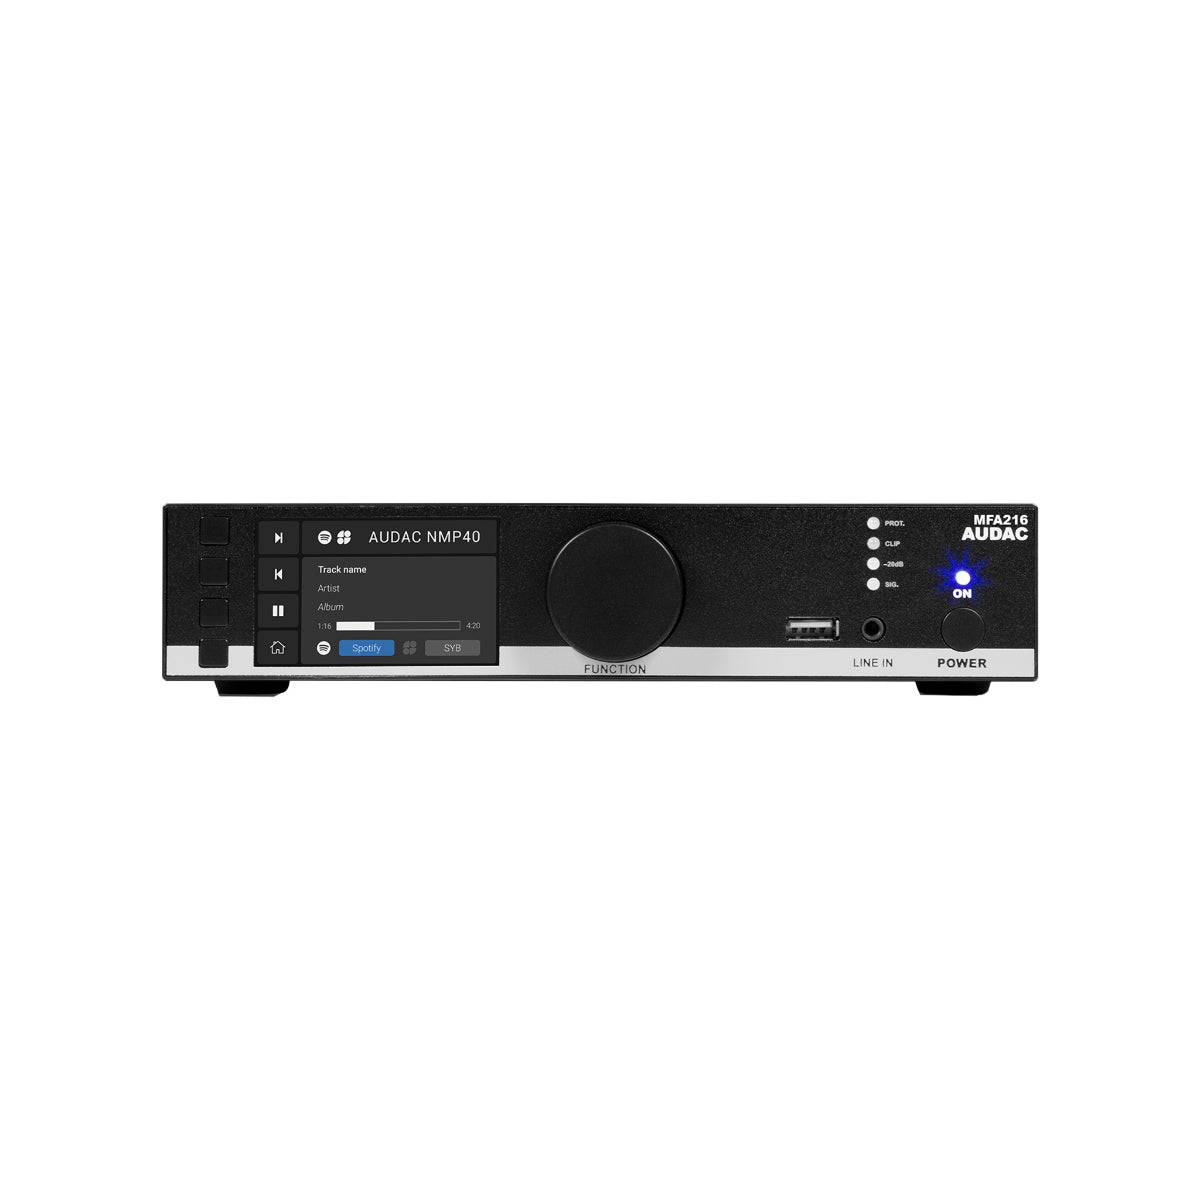 Audac MFA216 All-in-one audio solution Amplifier - 2 x 80W @ 4 Ohm - 160W @ 70/100V